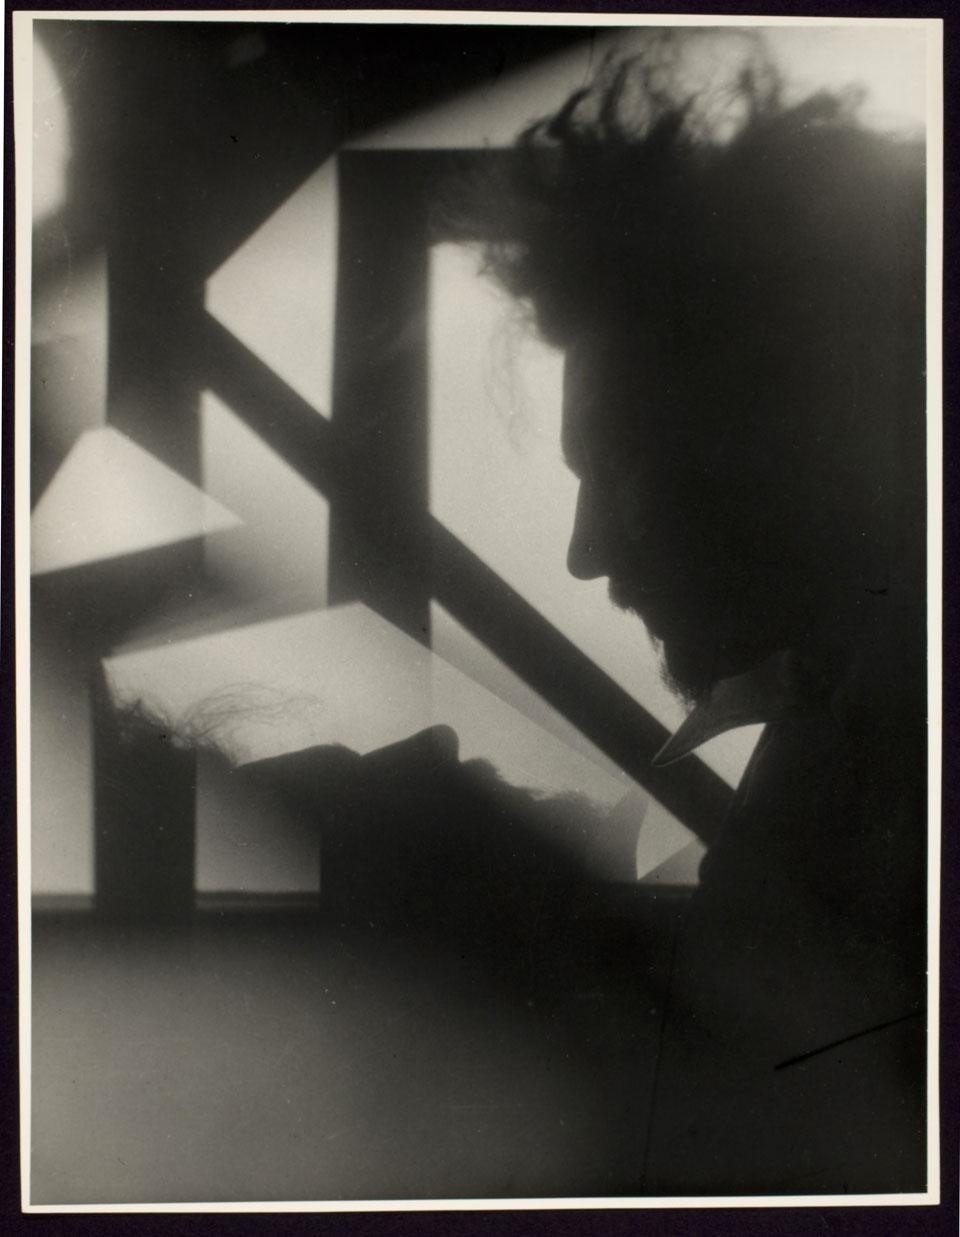 Alvin Langdon Coburn,
<em>Vortograph of Ezra Pound,</em> 1917.
George Eastman House, Rochester